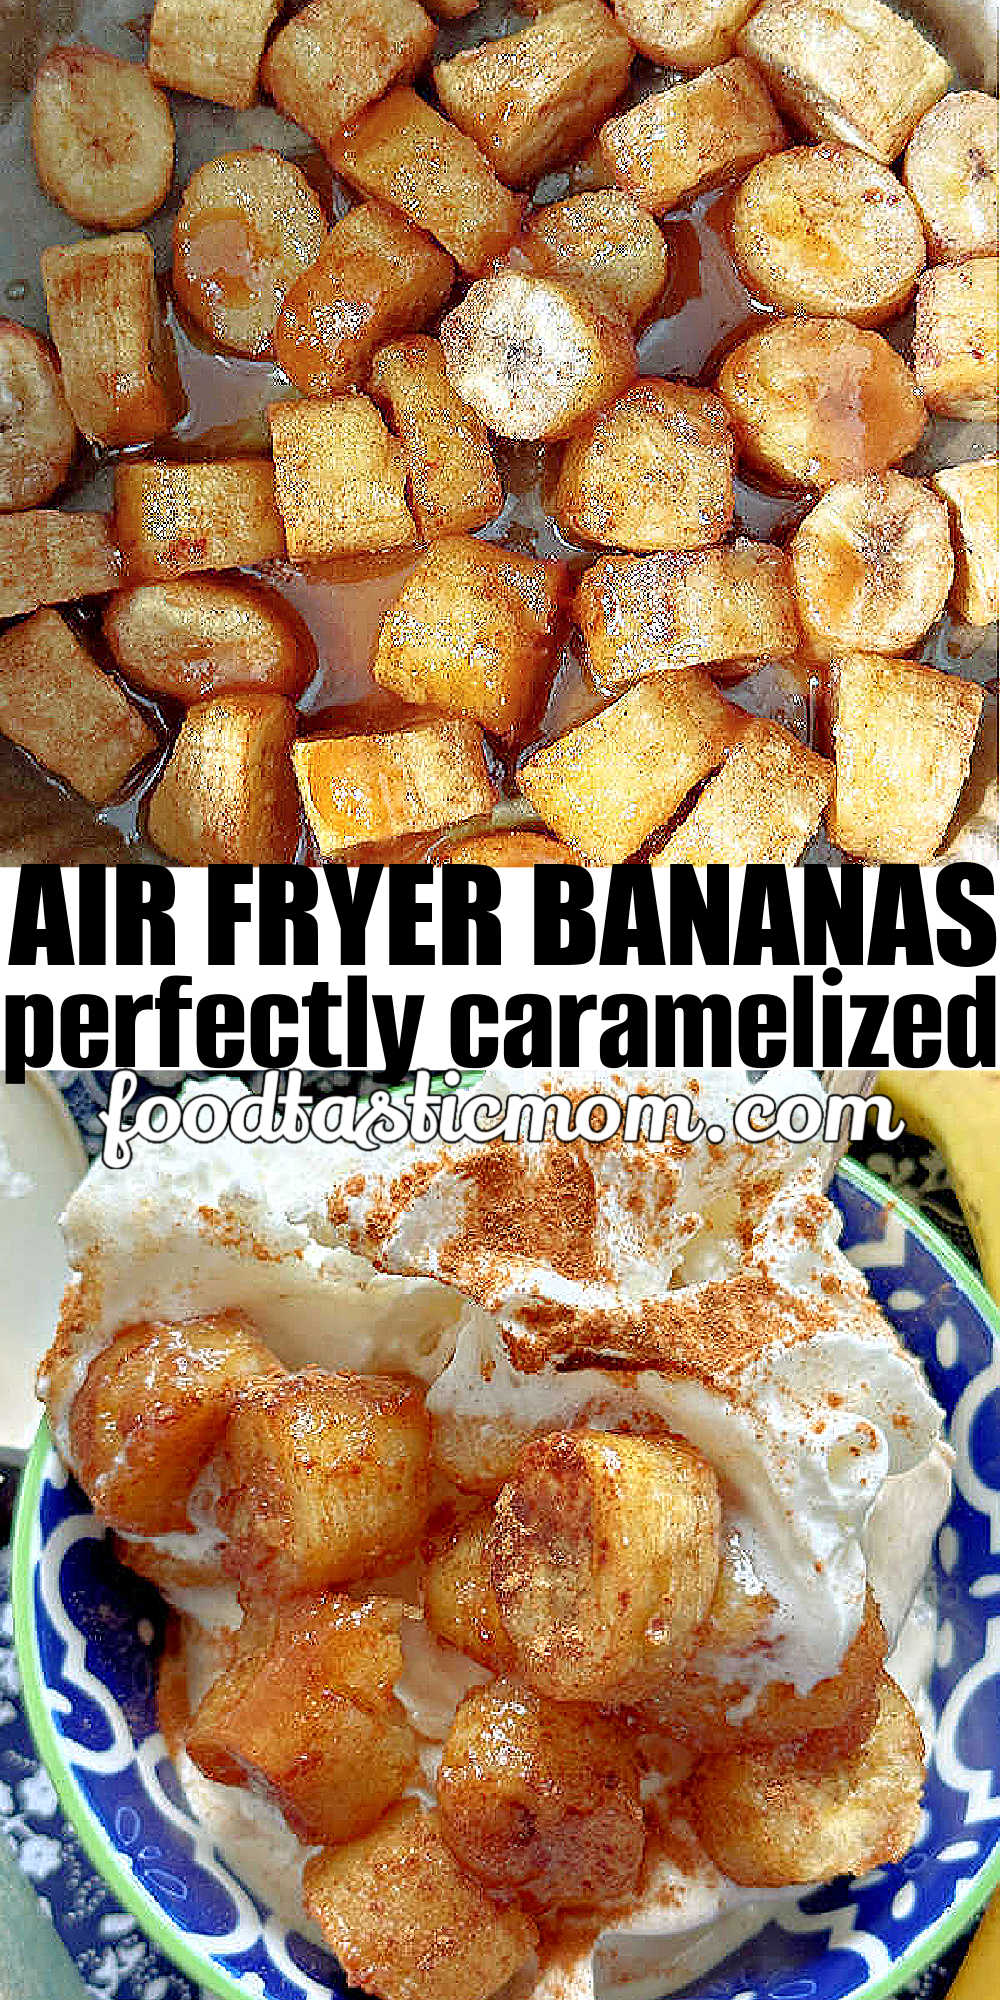 Air Fryer Bananas | Foodtastic Mom #airfryerbananas #airfryerrecipes #bananarecipes via @foodtasticmom